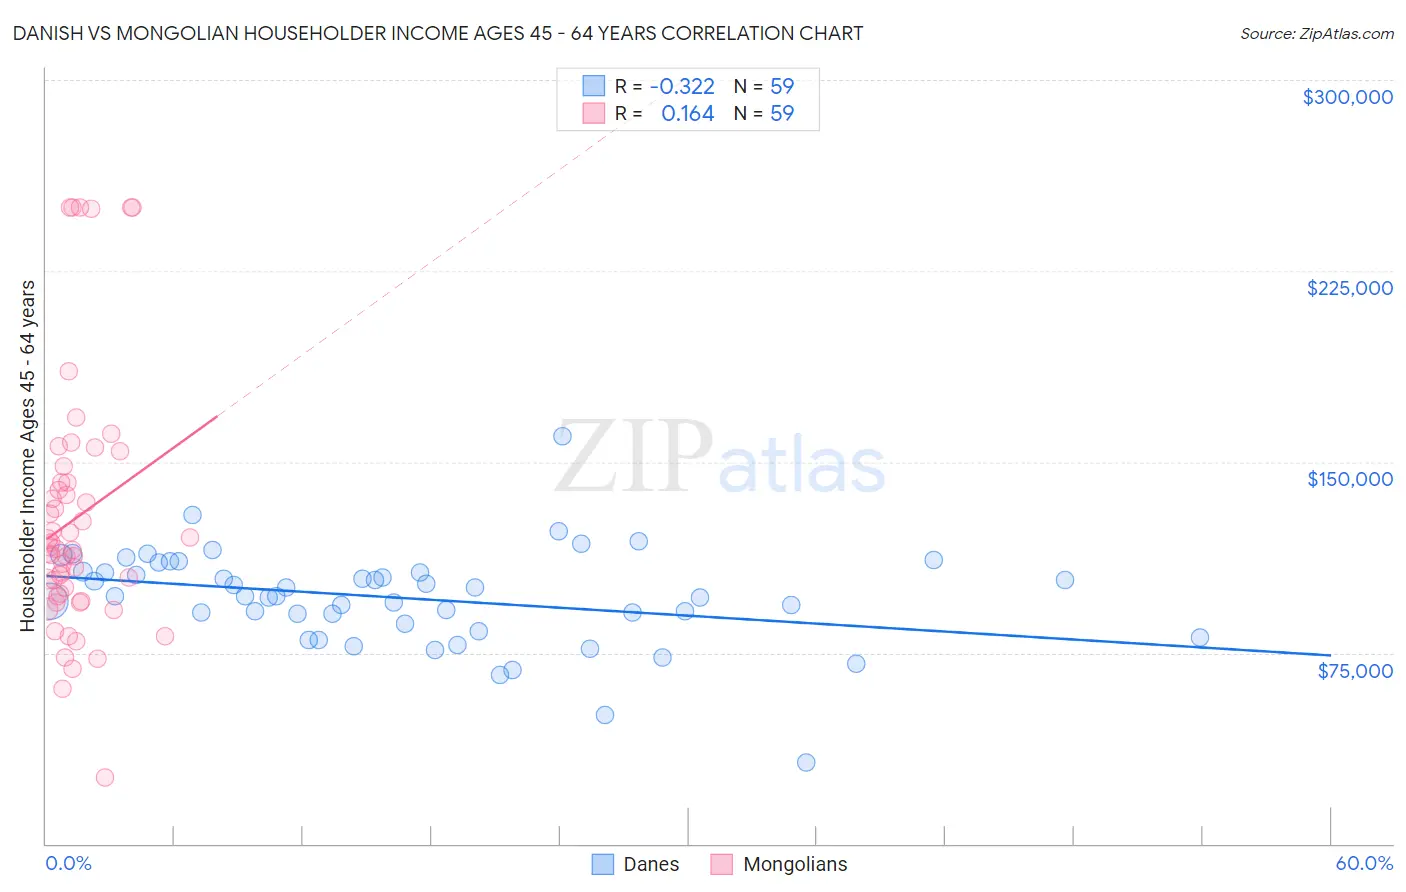 Danish vs Mongolian Householder Income Ages 45 - 64 years